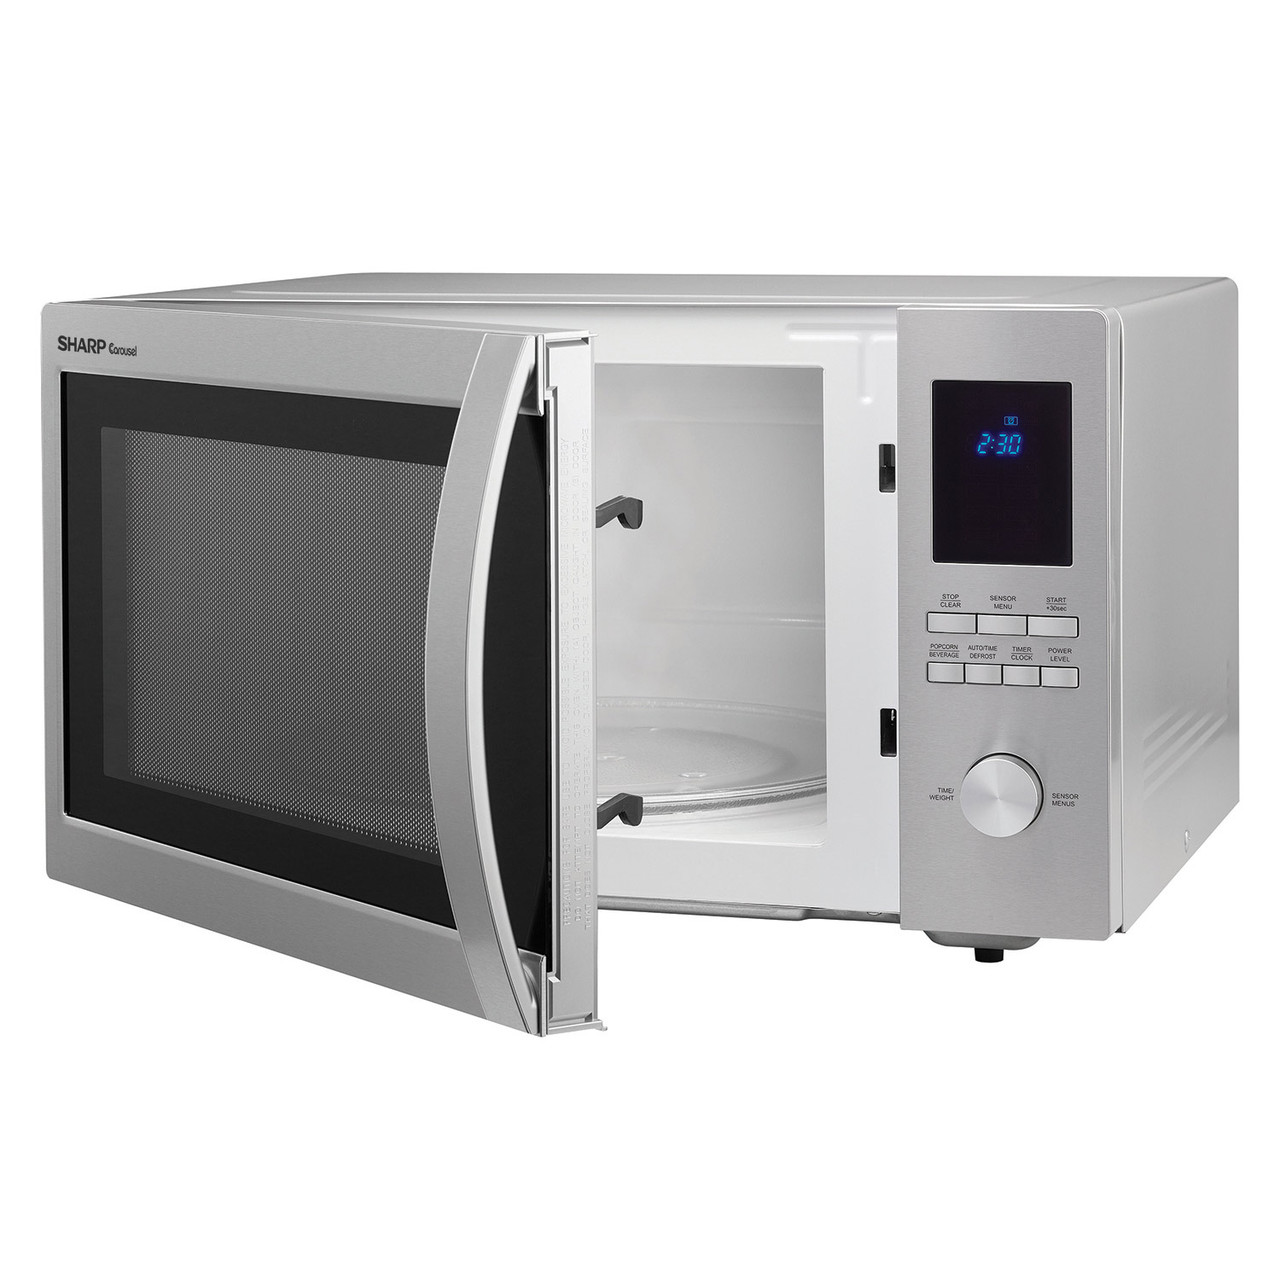 1.6 cu. ft. Sharp Stainless Steel Carousel Countertop Microwave (ZSMC1655BS) – left angle view with door open